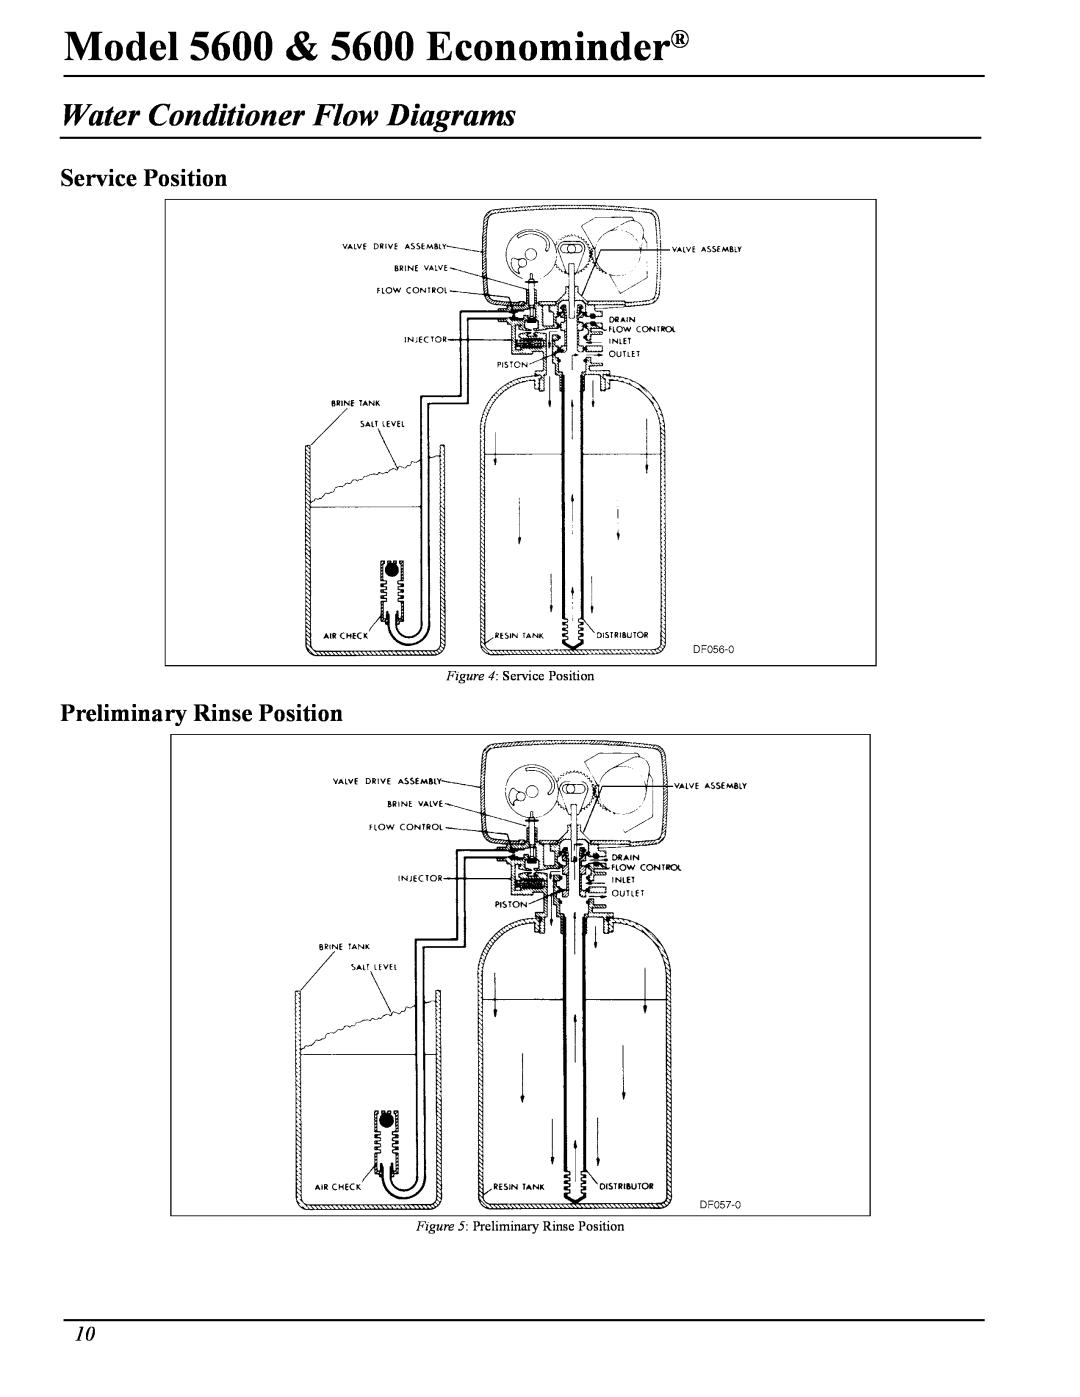 Pentair 40106 Rev. H 05/05 manual Water Conditioner Flow Diagrams, Service Position, Preliminary Rinse Position 